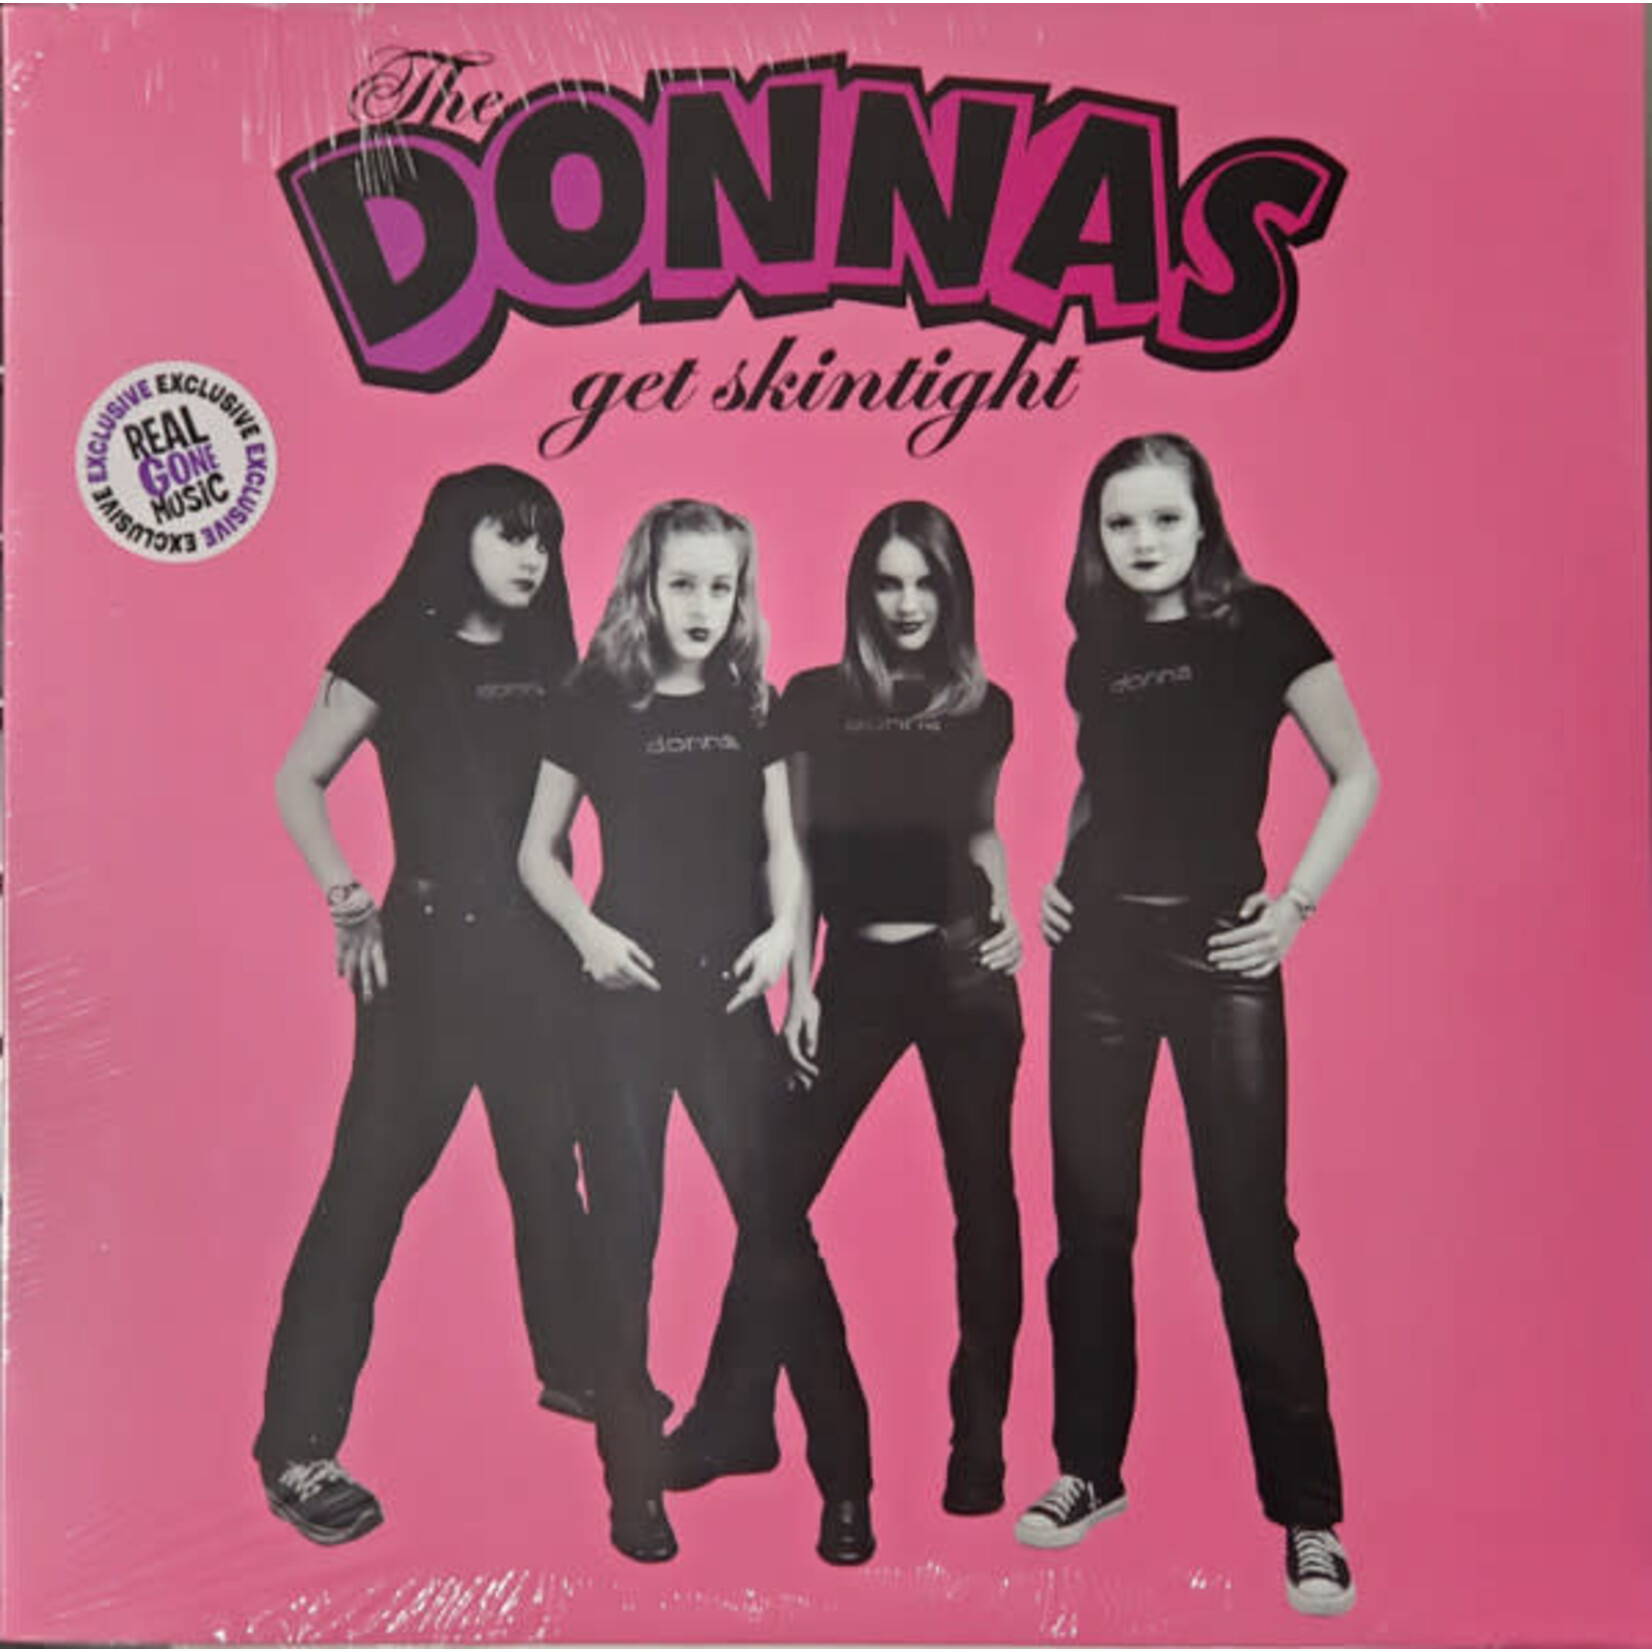 [New] Donnas - Get Skintight (remastered, purple vinyl with pink swirl)